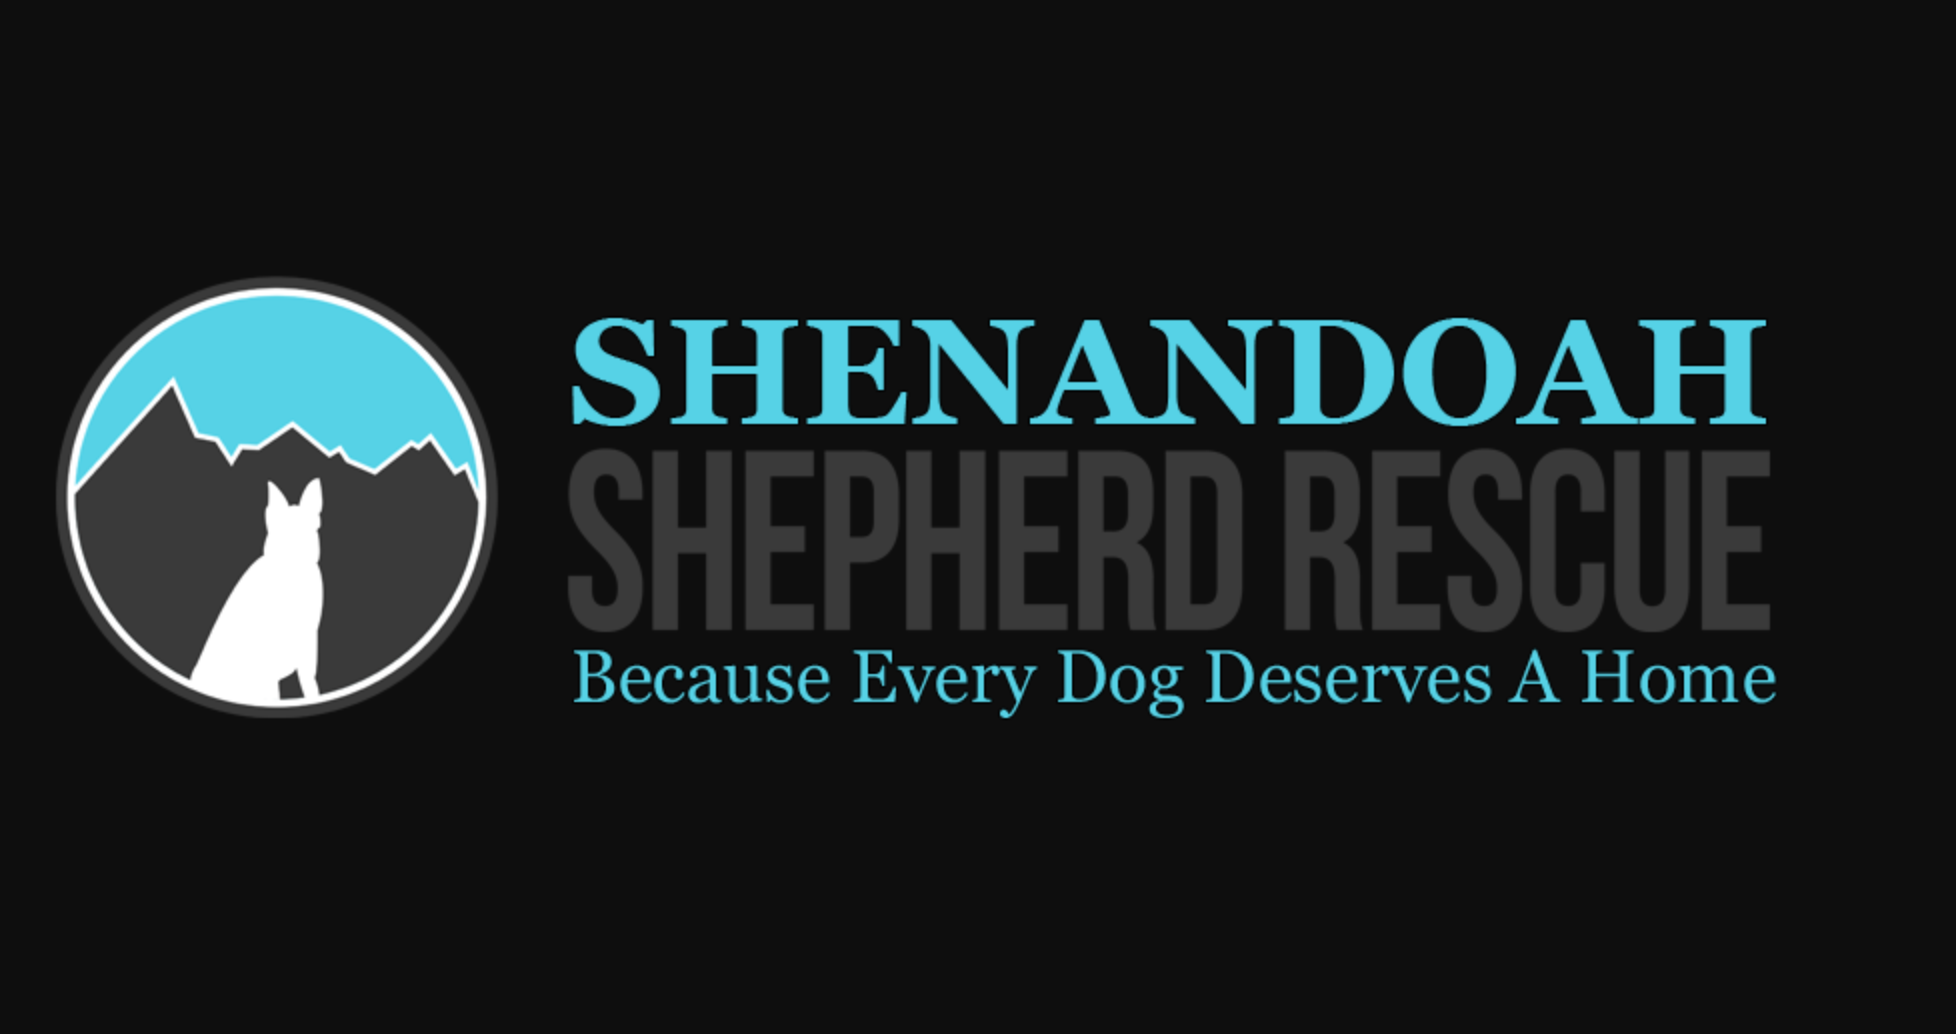 Shenandoah Shepherd Rescue logo